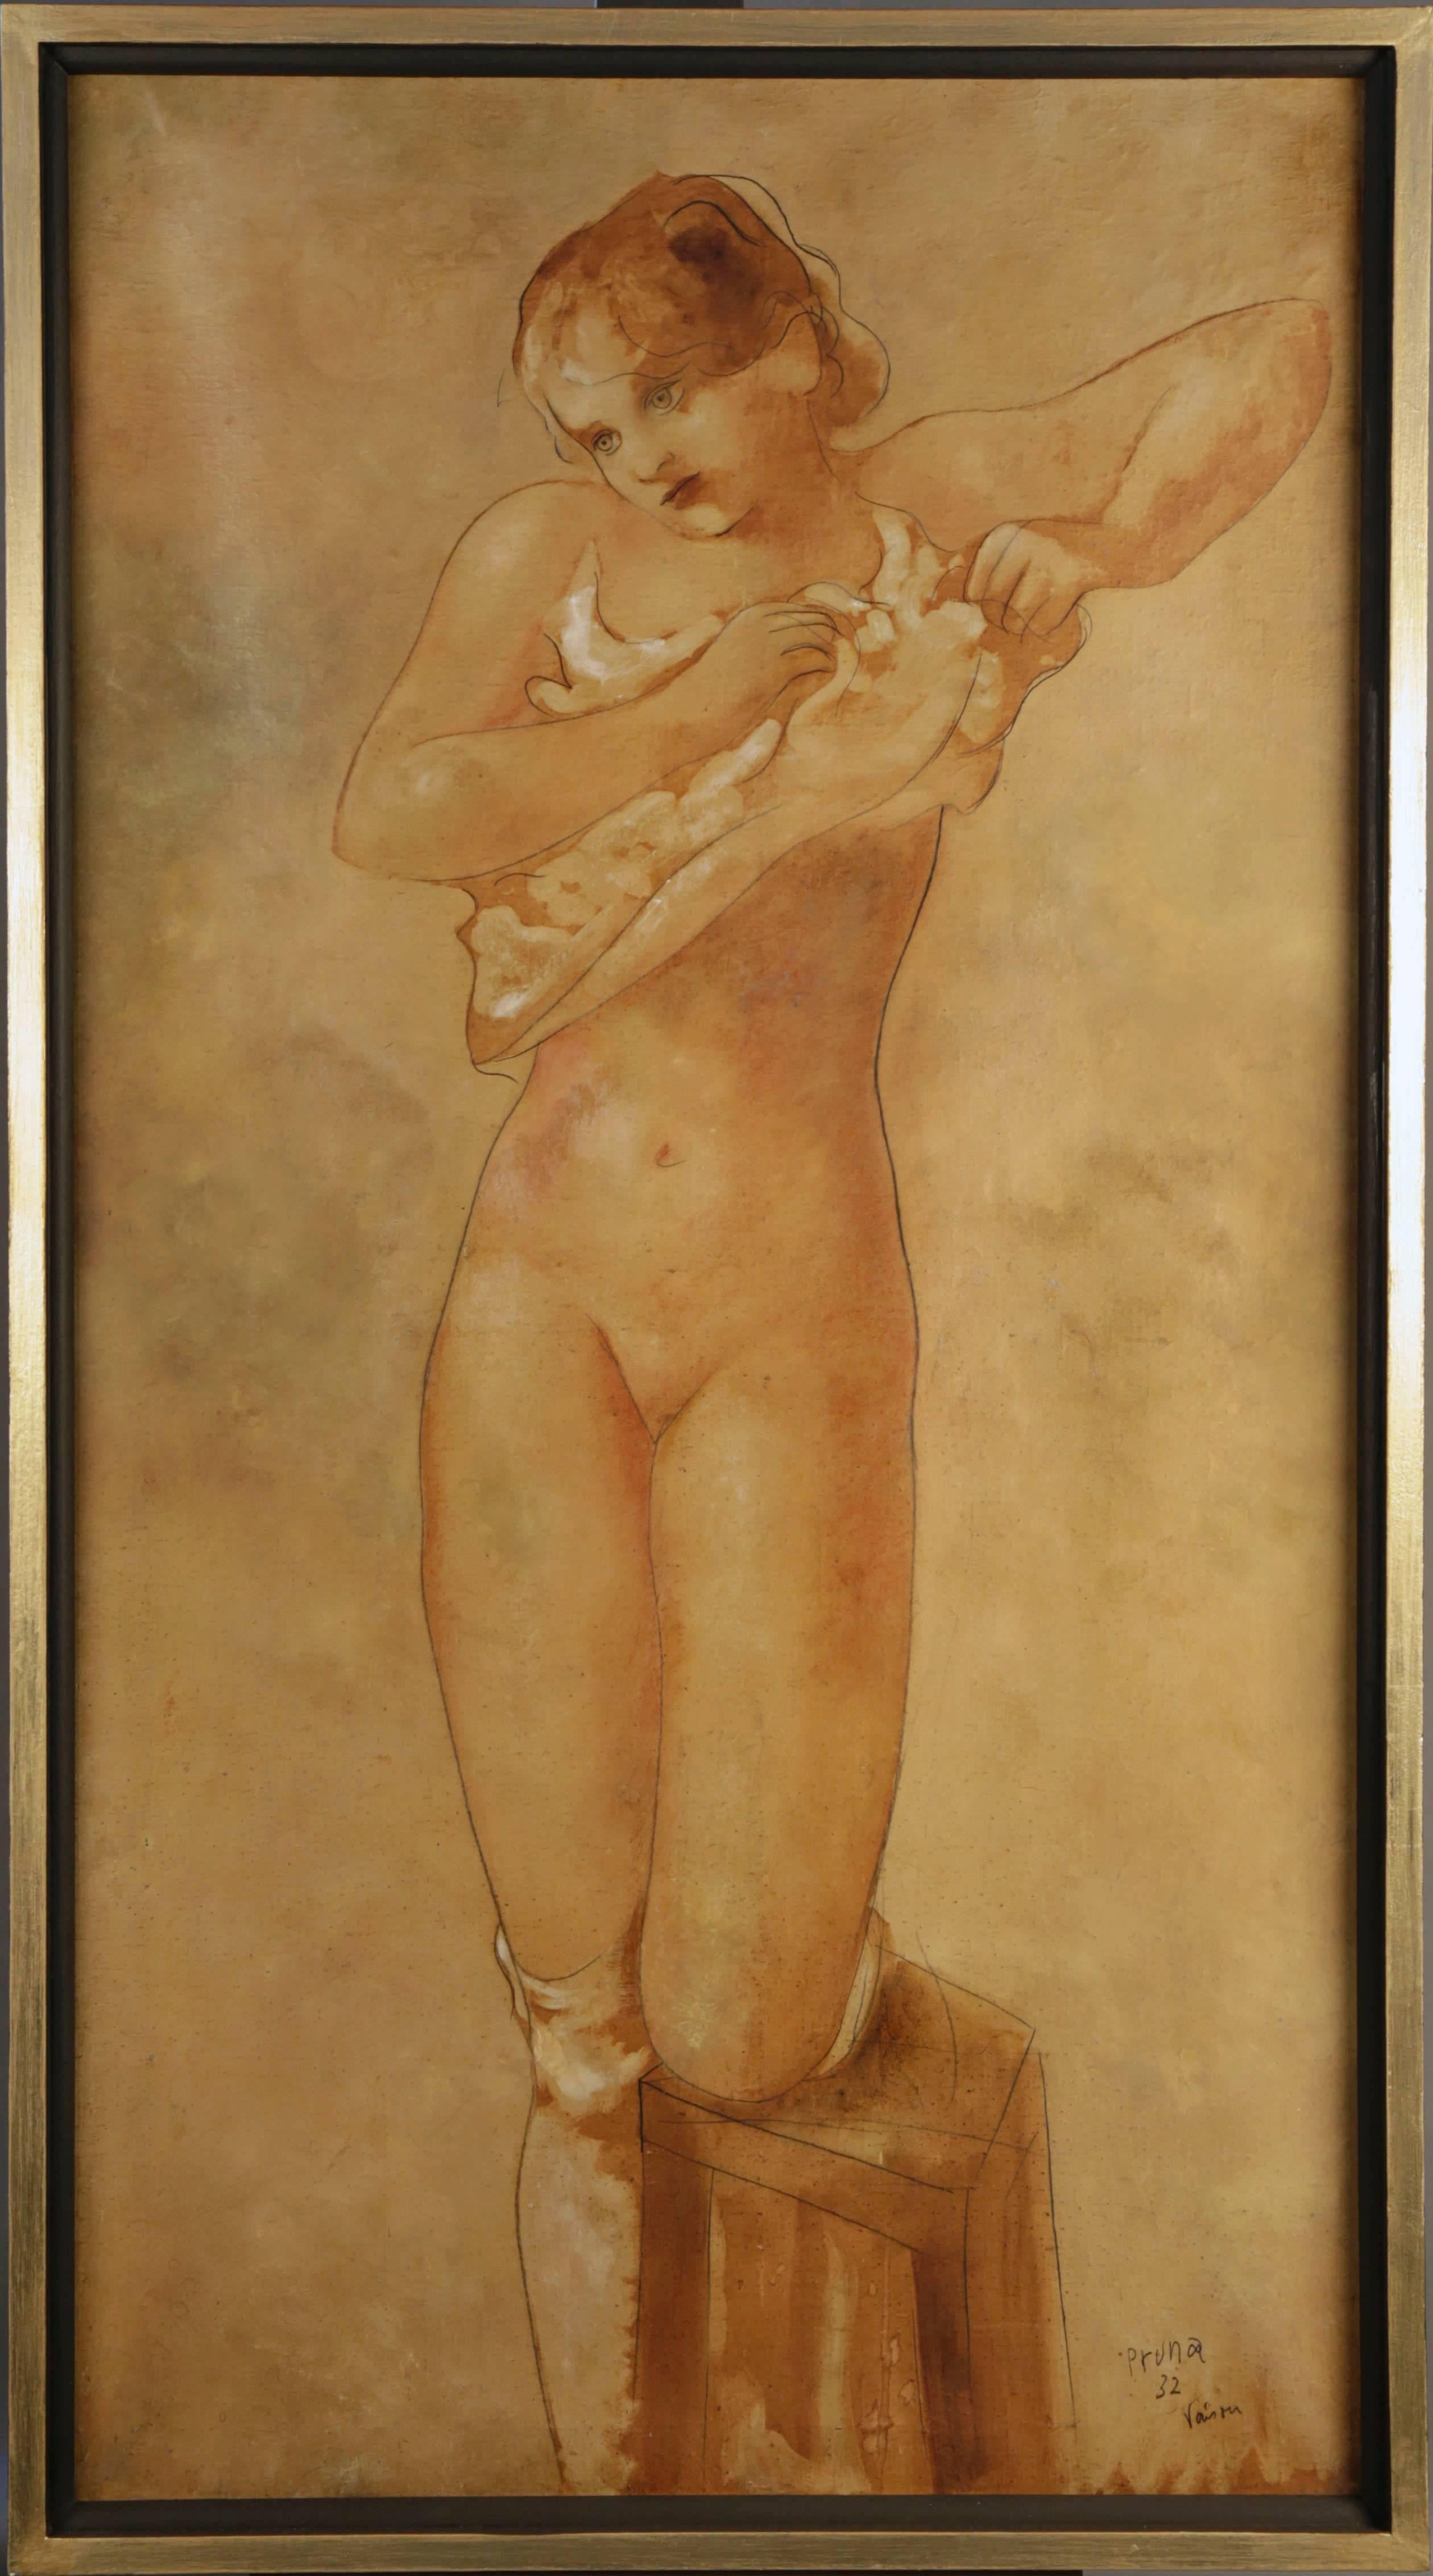 Desnudo - Painting by Pere Pruna y Ocerans